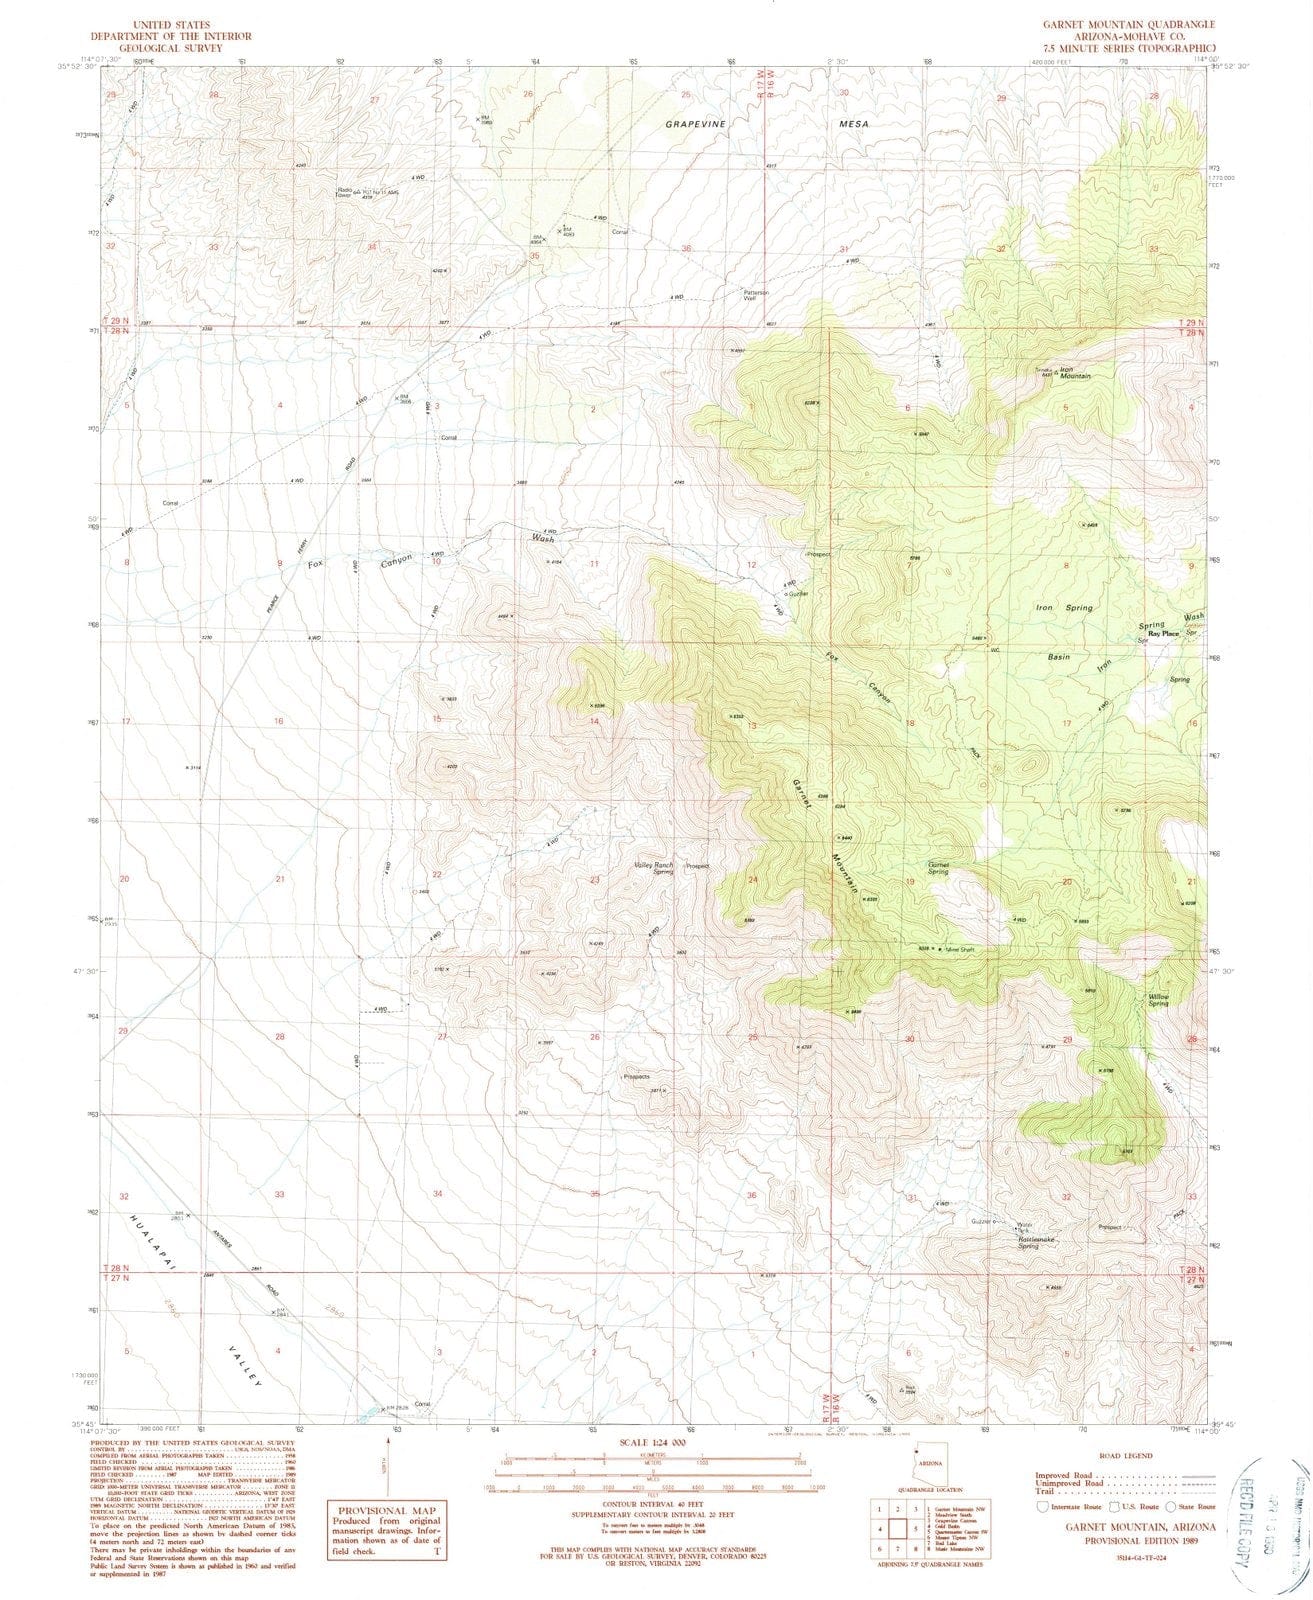 1989 Garnet Mountain, AZ - Arizona - USGS Topographic Map v2